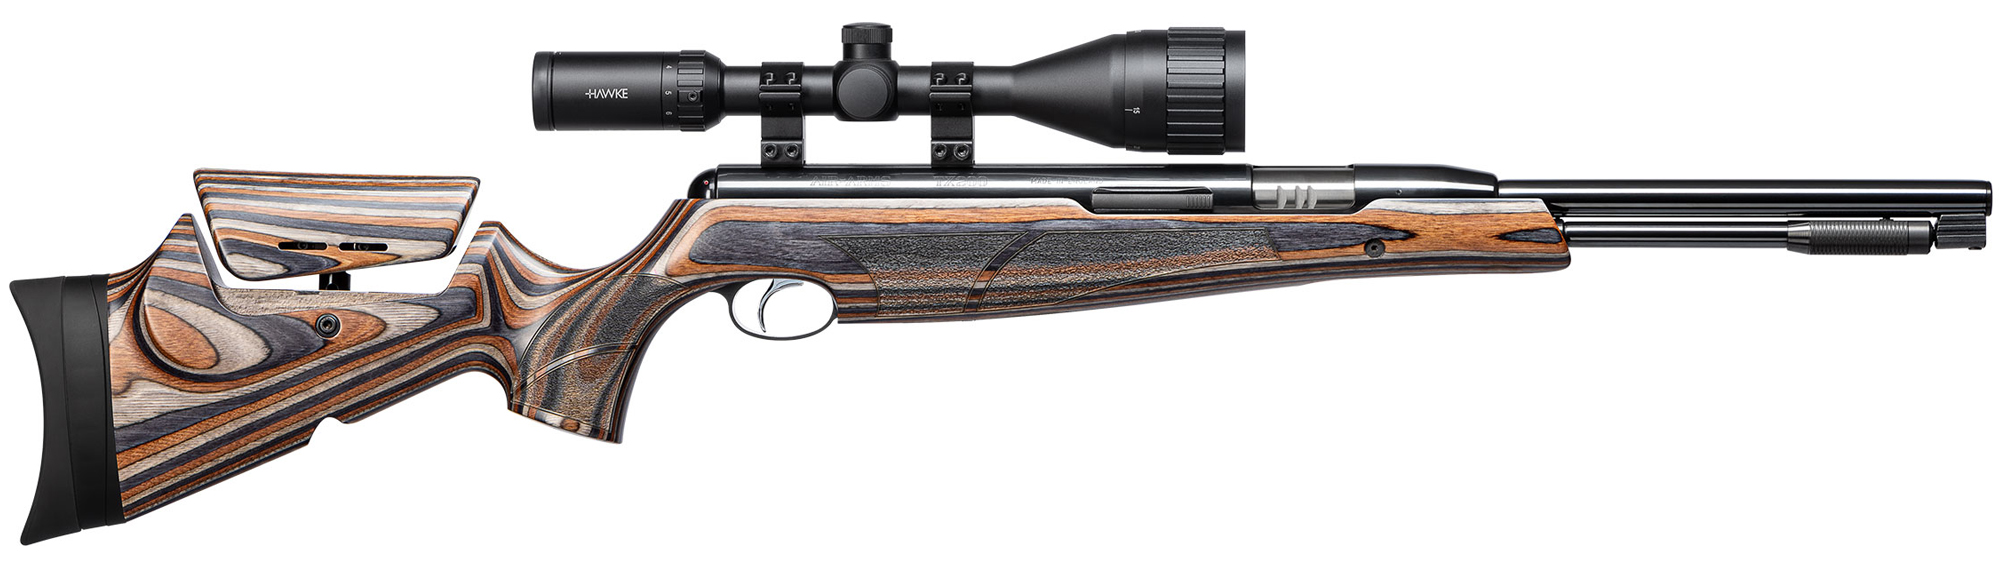 TX200 Hunter Carbine b1